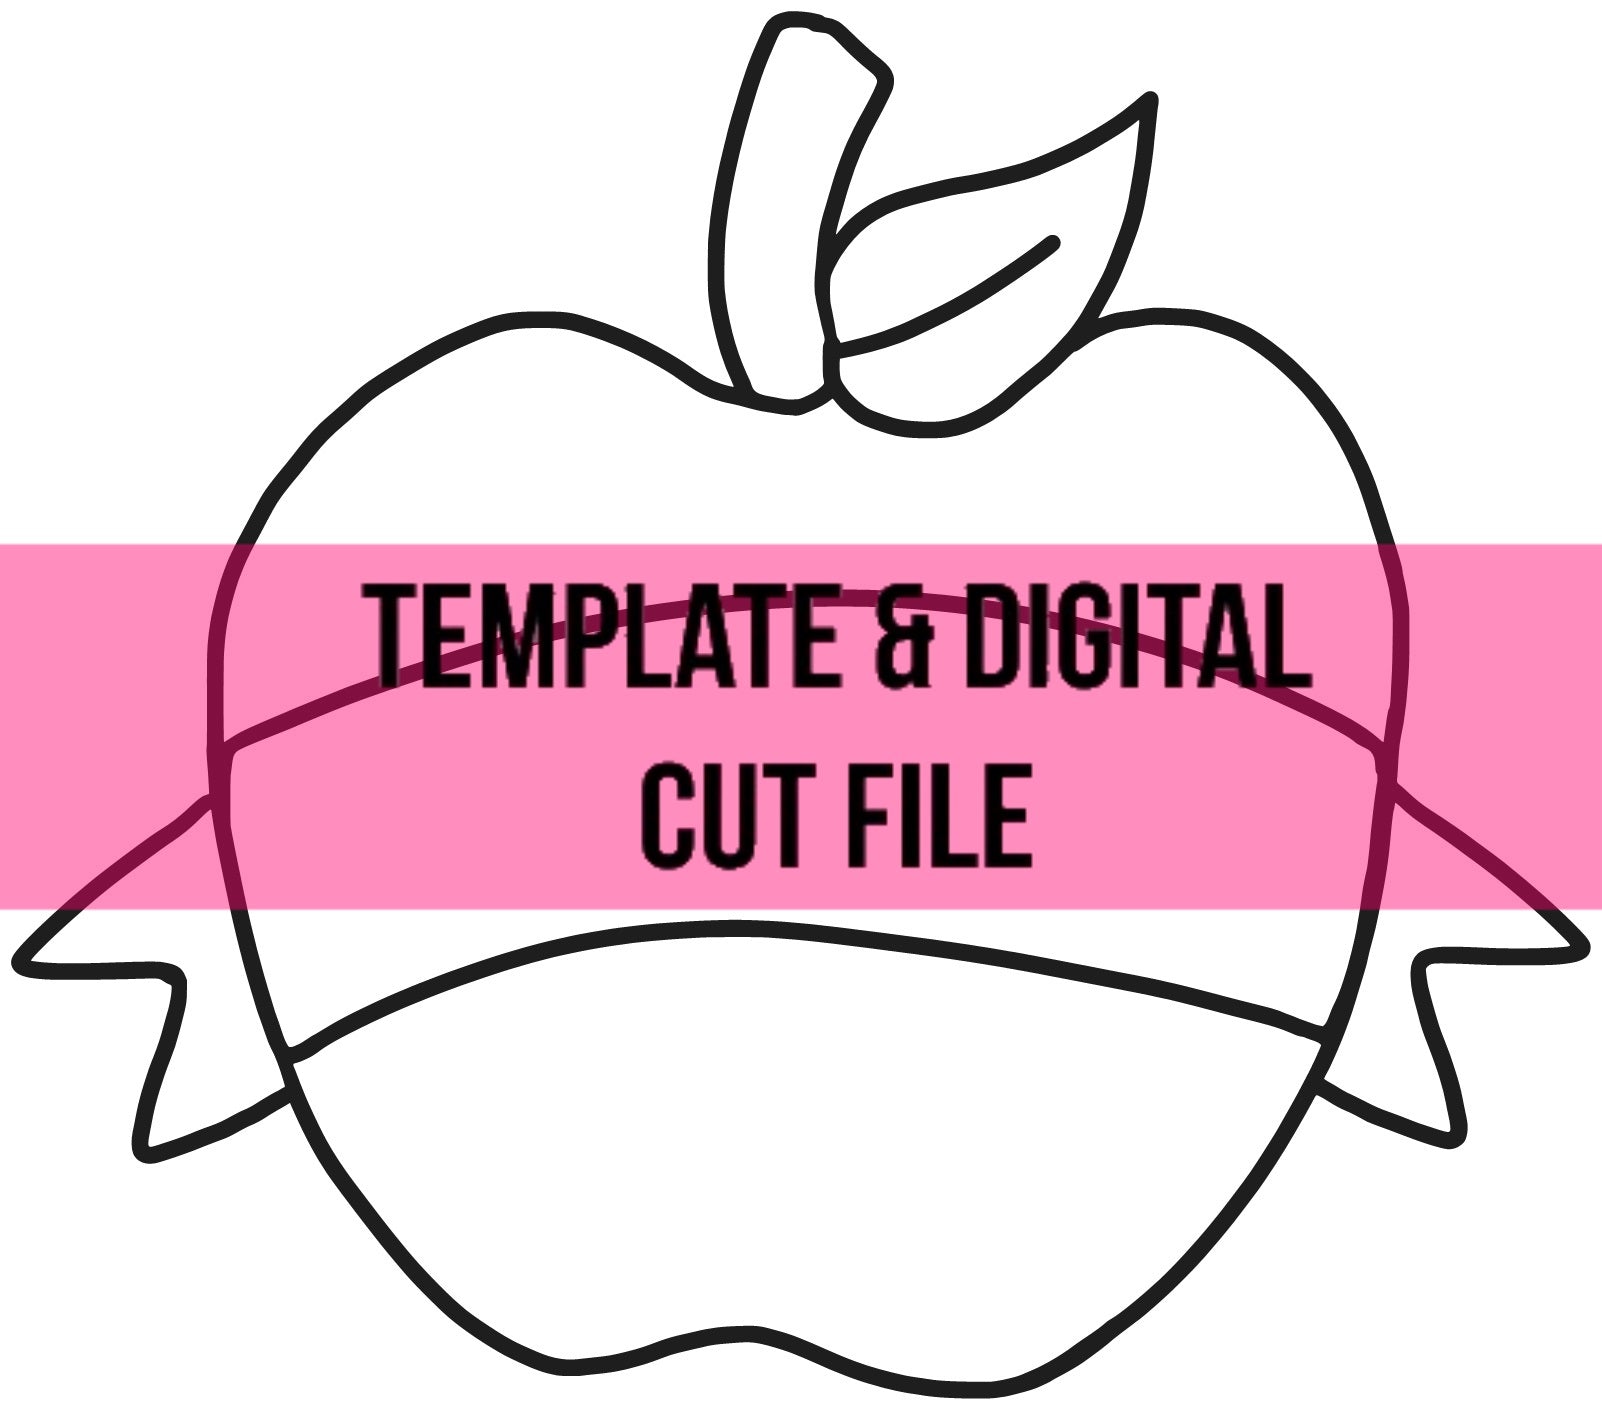 Apple Banner Template & Digital Cut File